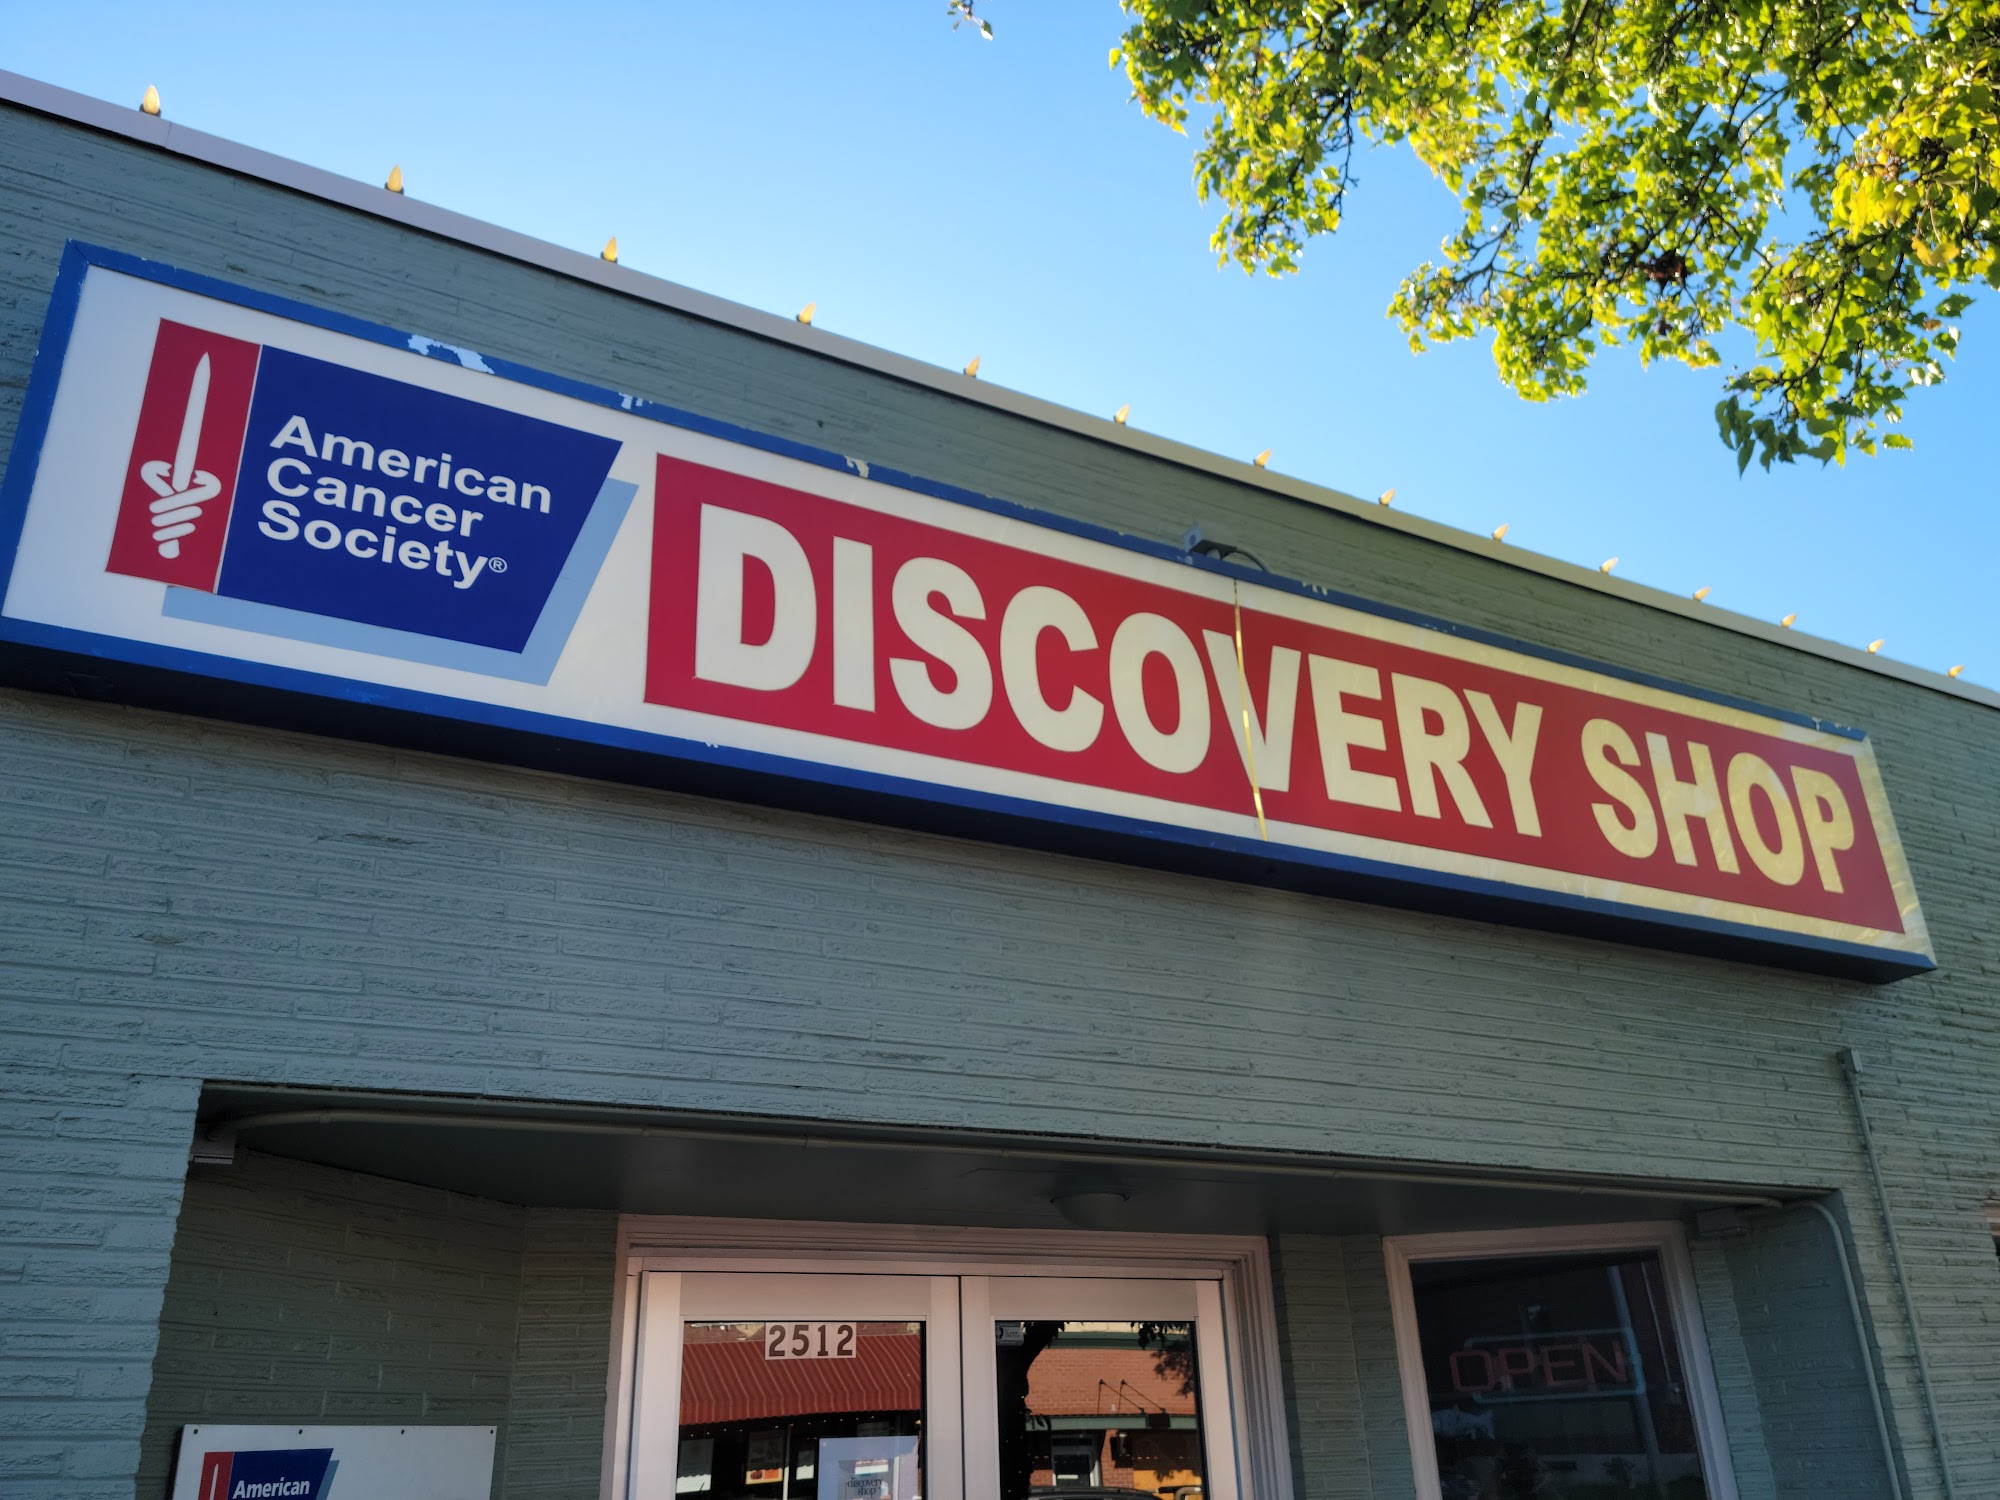 American Cancer Society Discovery Shop - Tacoma, WA